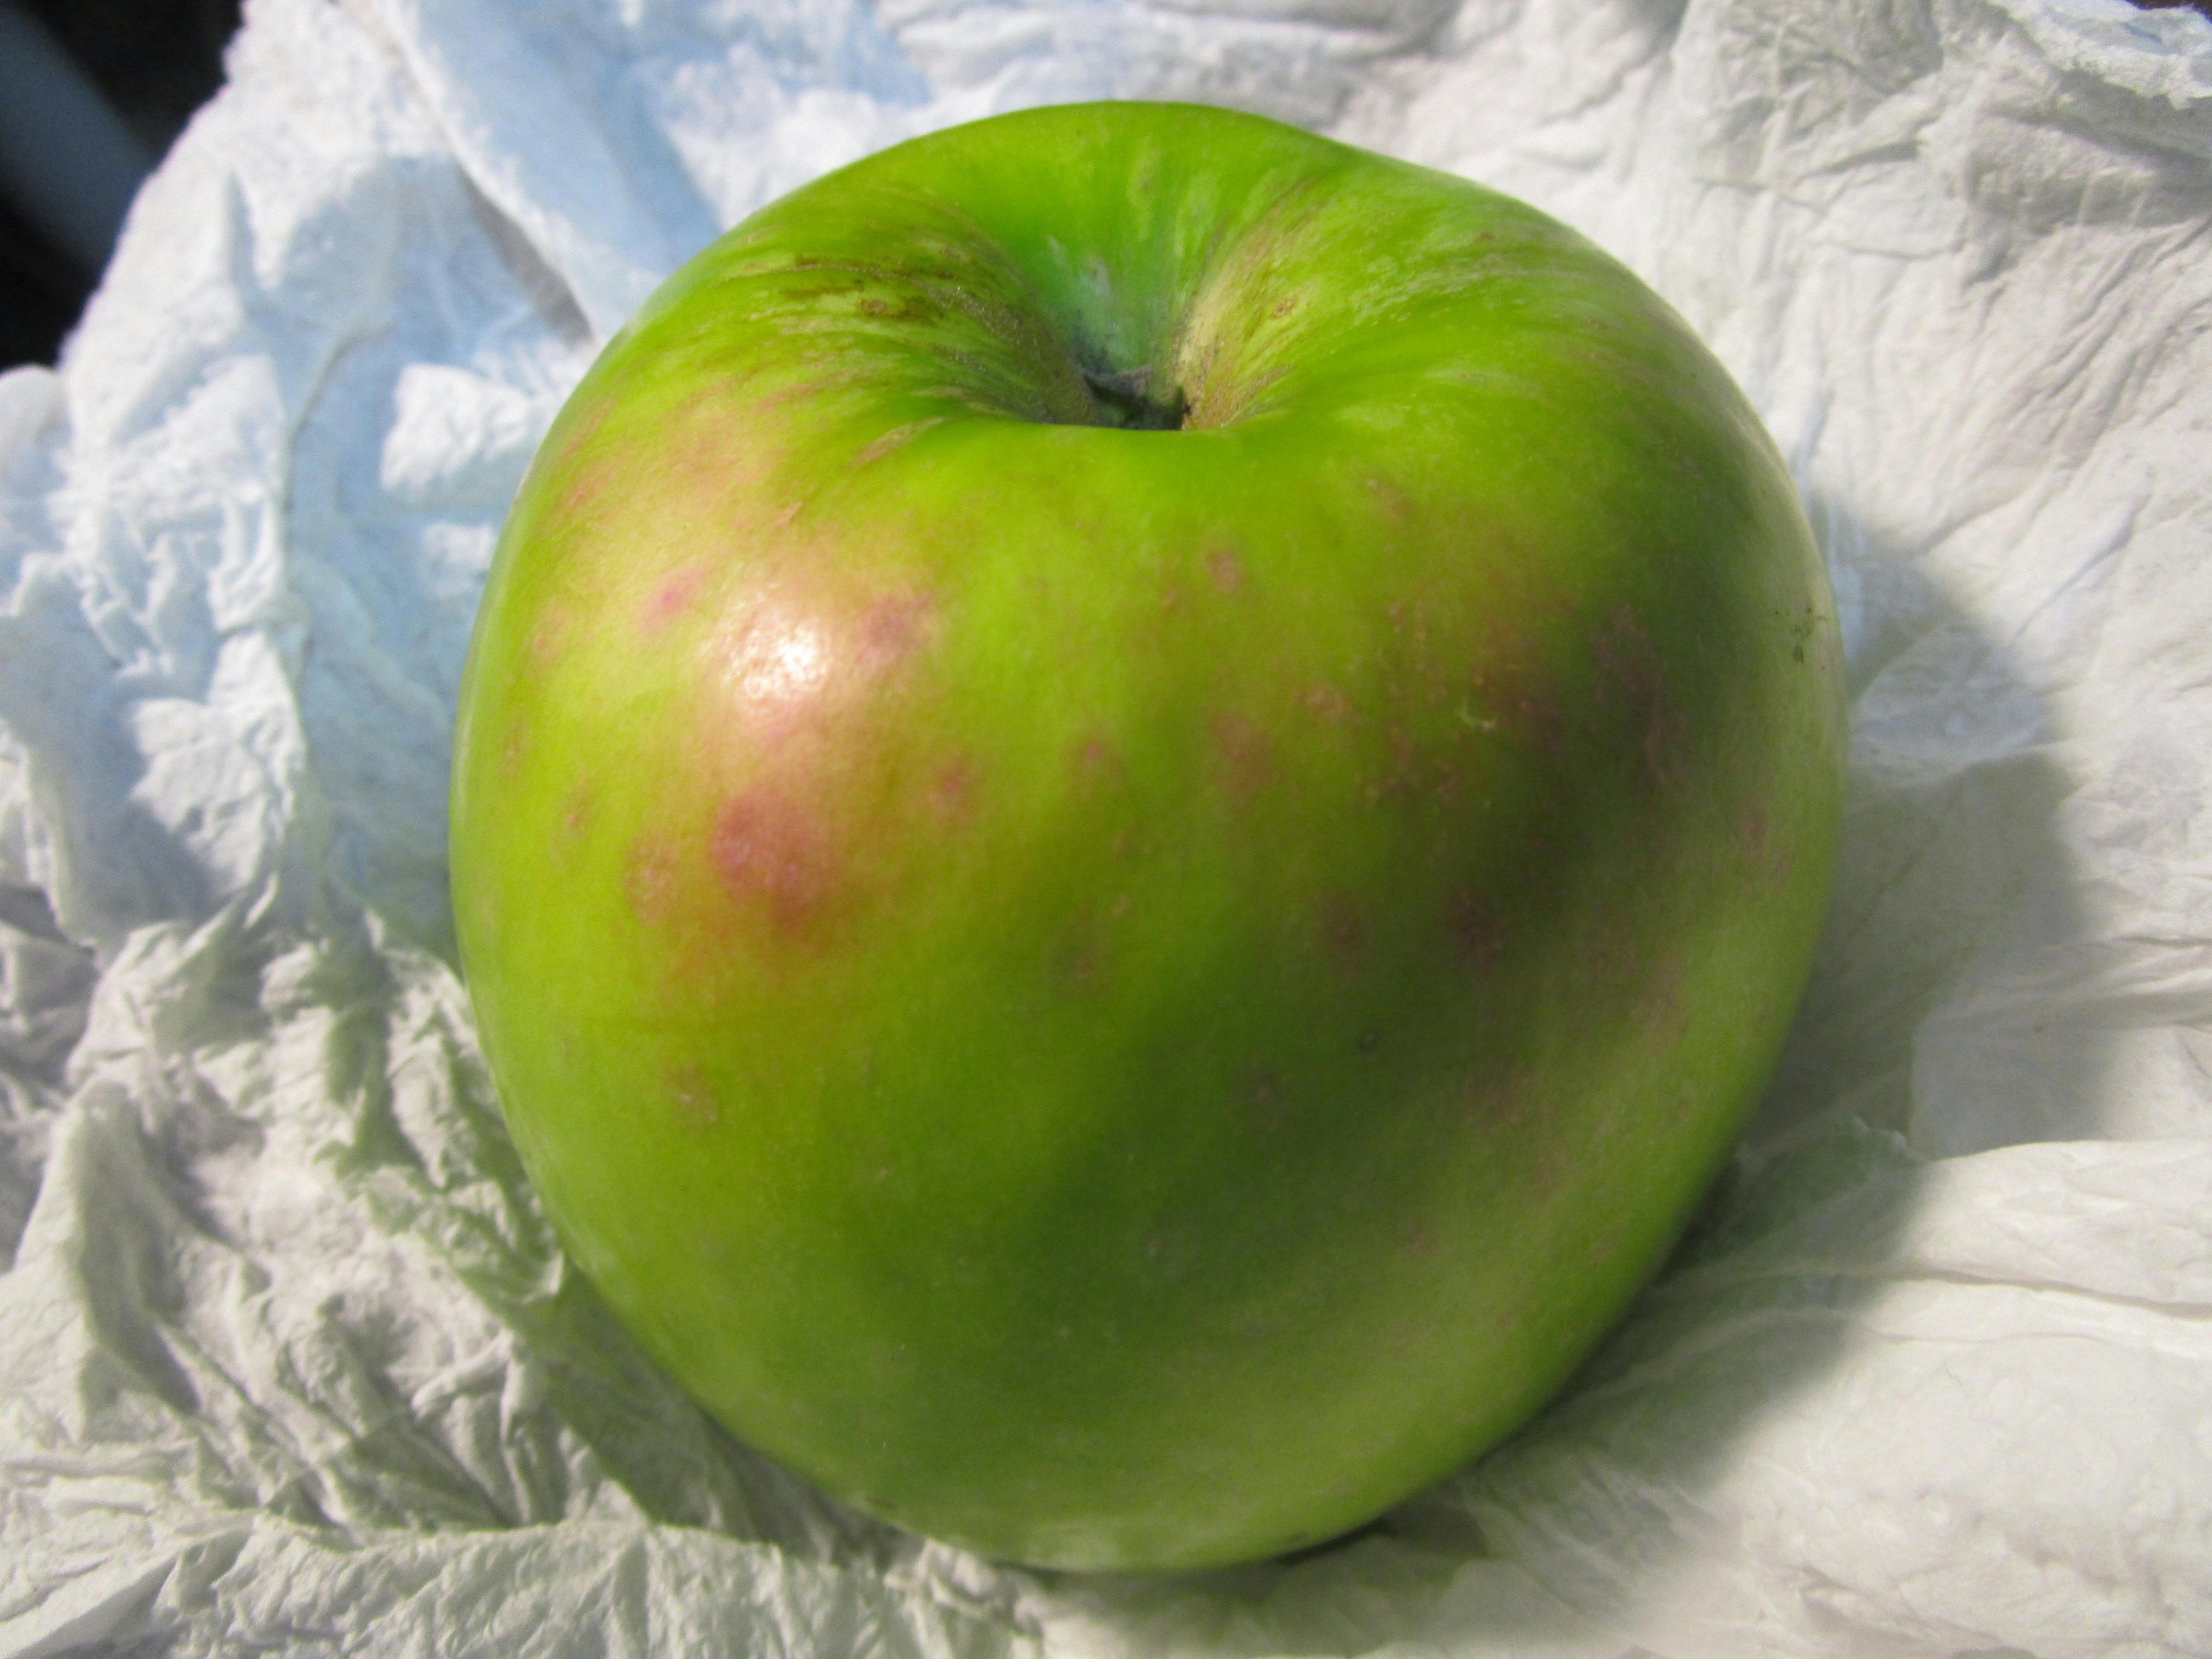 Free stock photo of fruit apple homegrown green garden California home